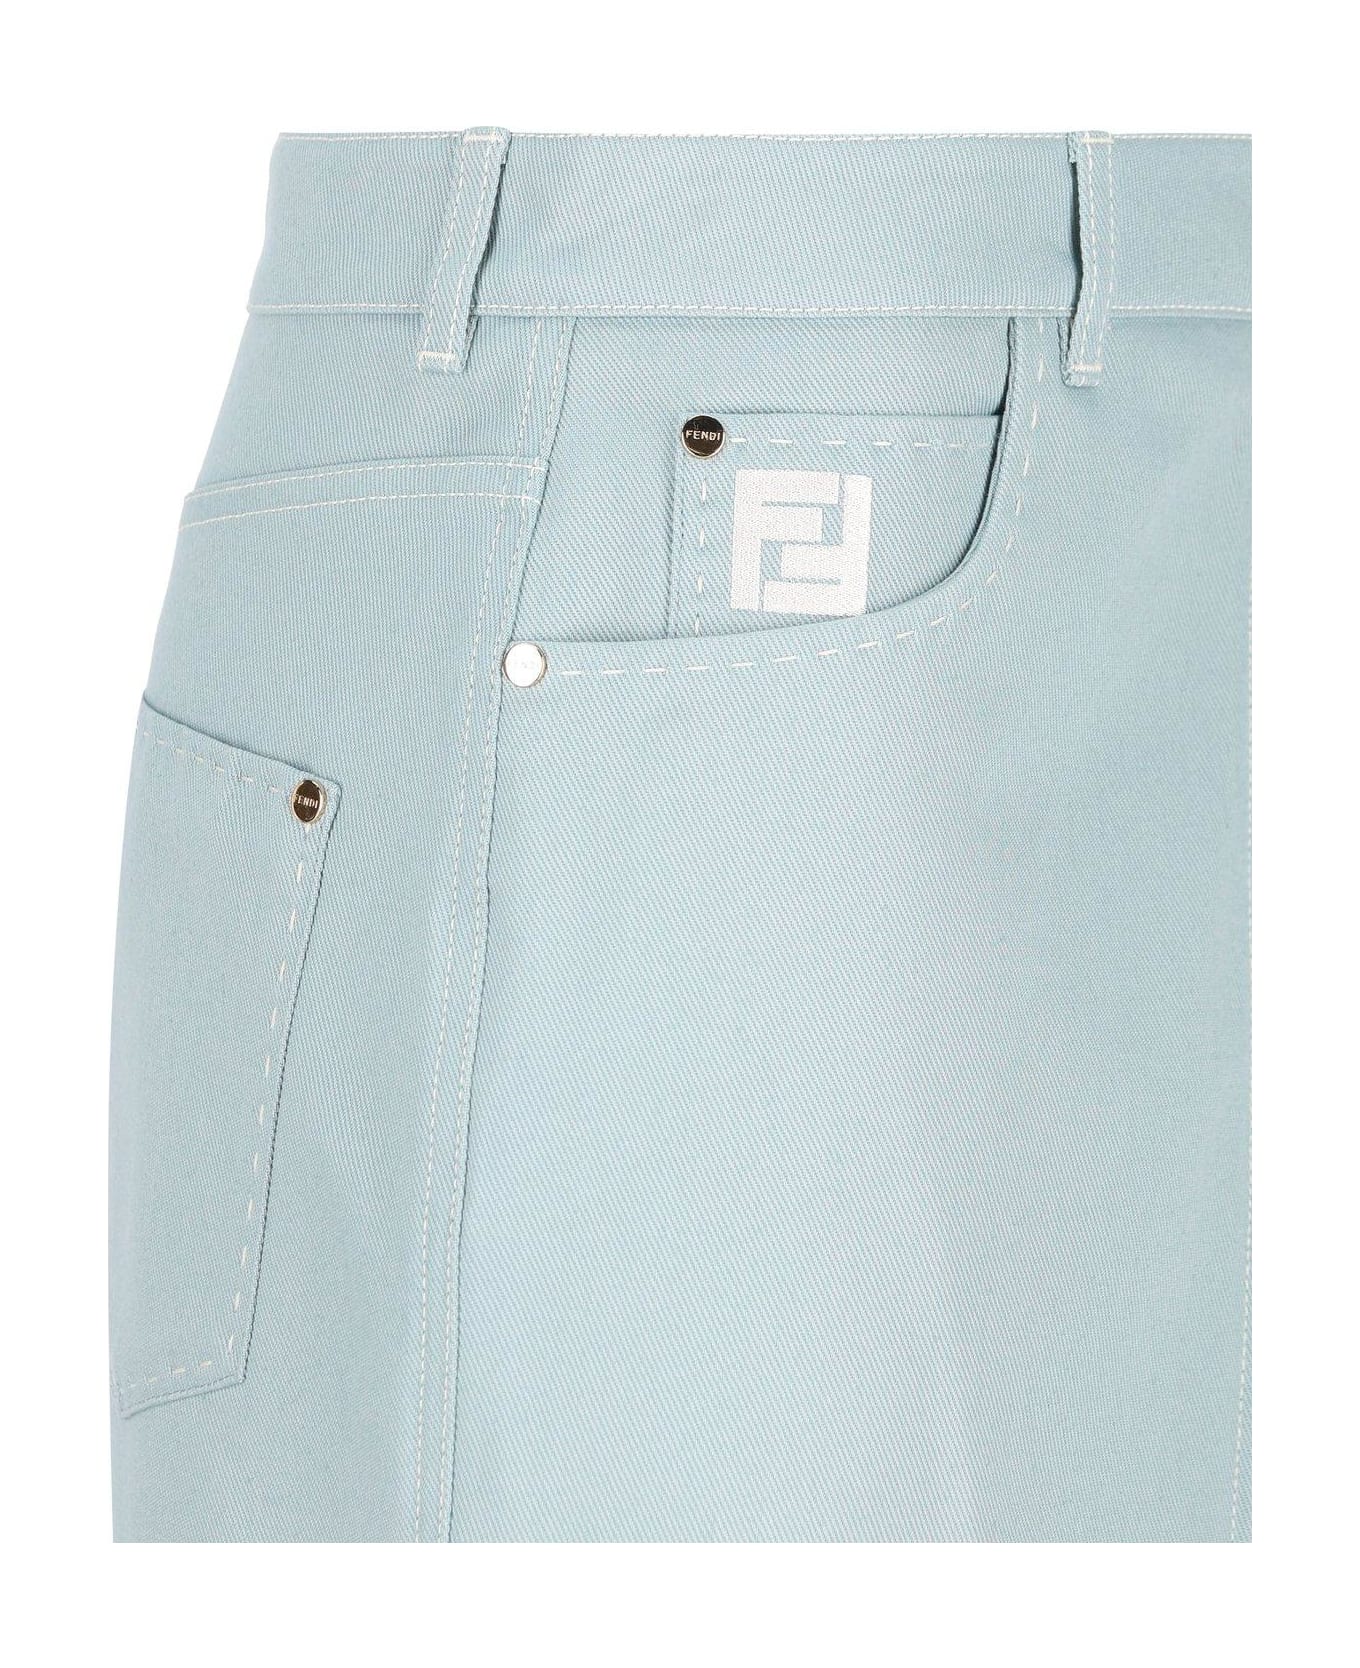 Fendi Zip-up Denim Midi Skirt - Denim/pale blue